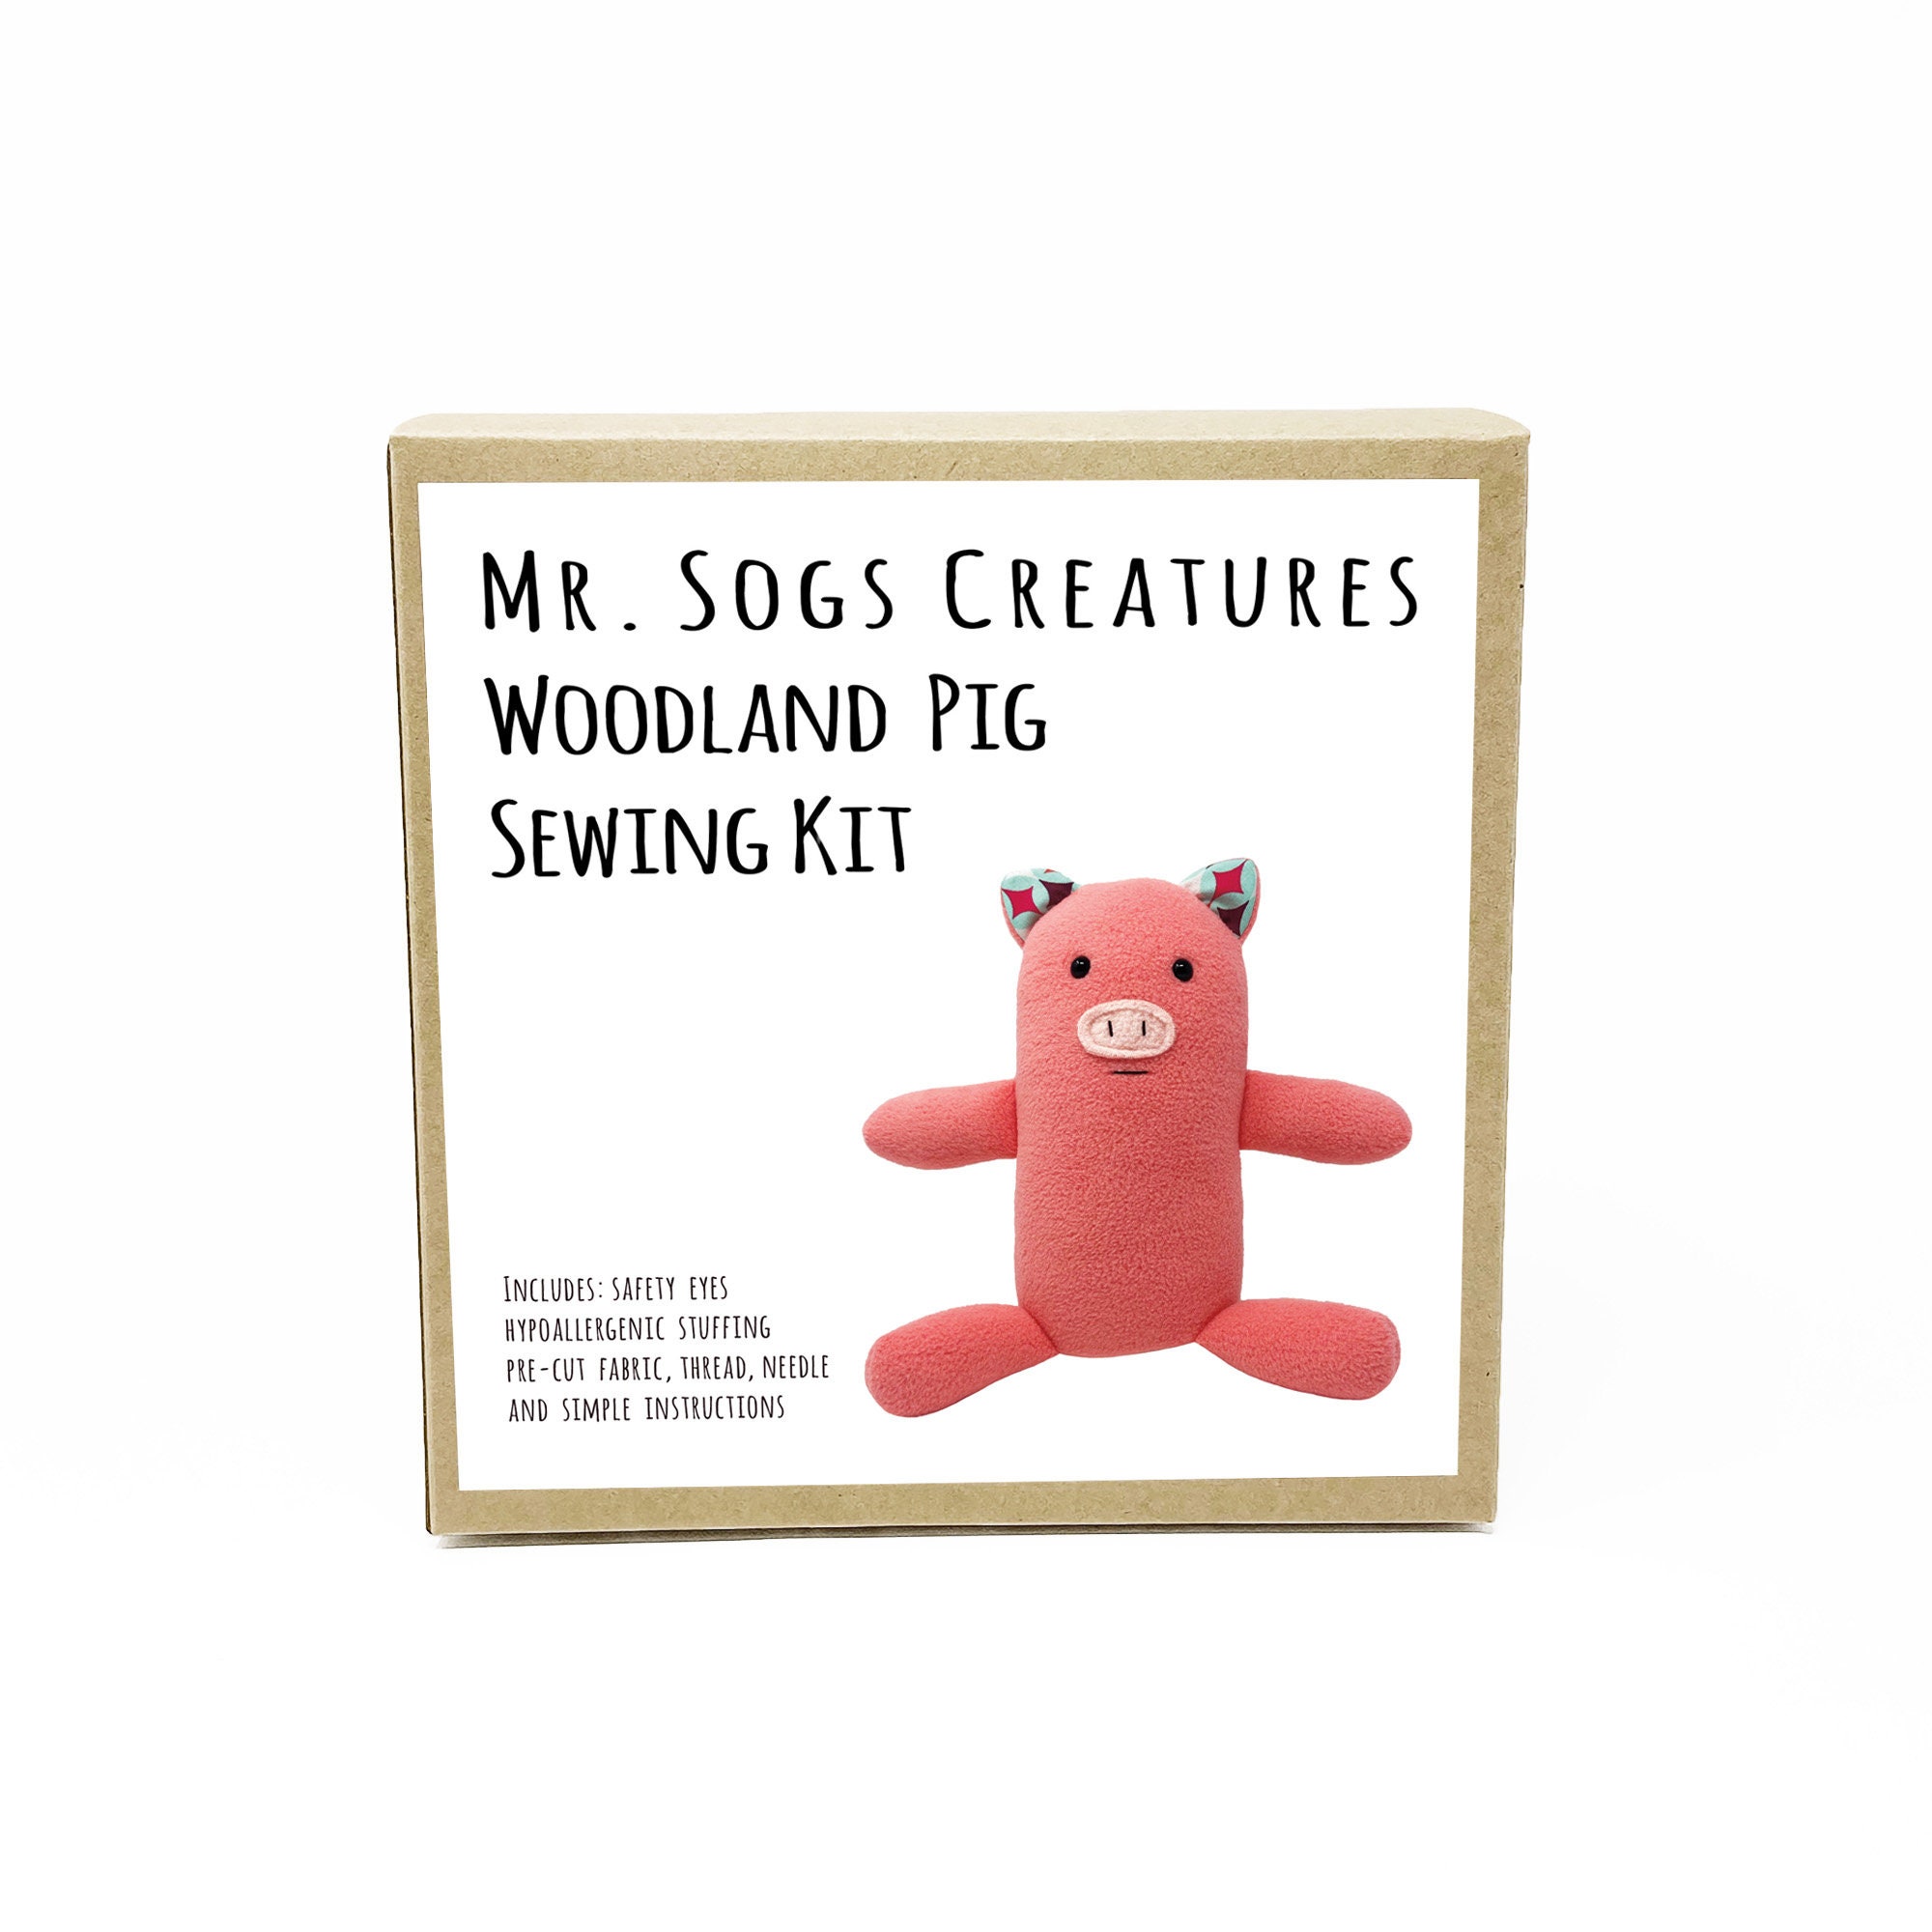 Polar Bear DIY Hand Sewing & Embroidery Kit Felt Stuffed Animal Kit 